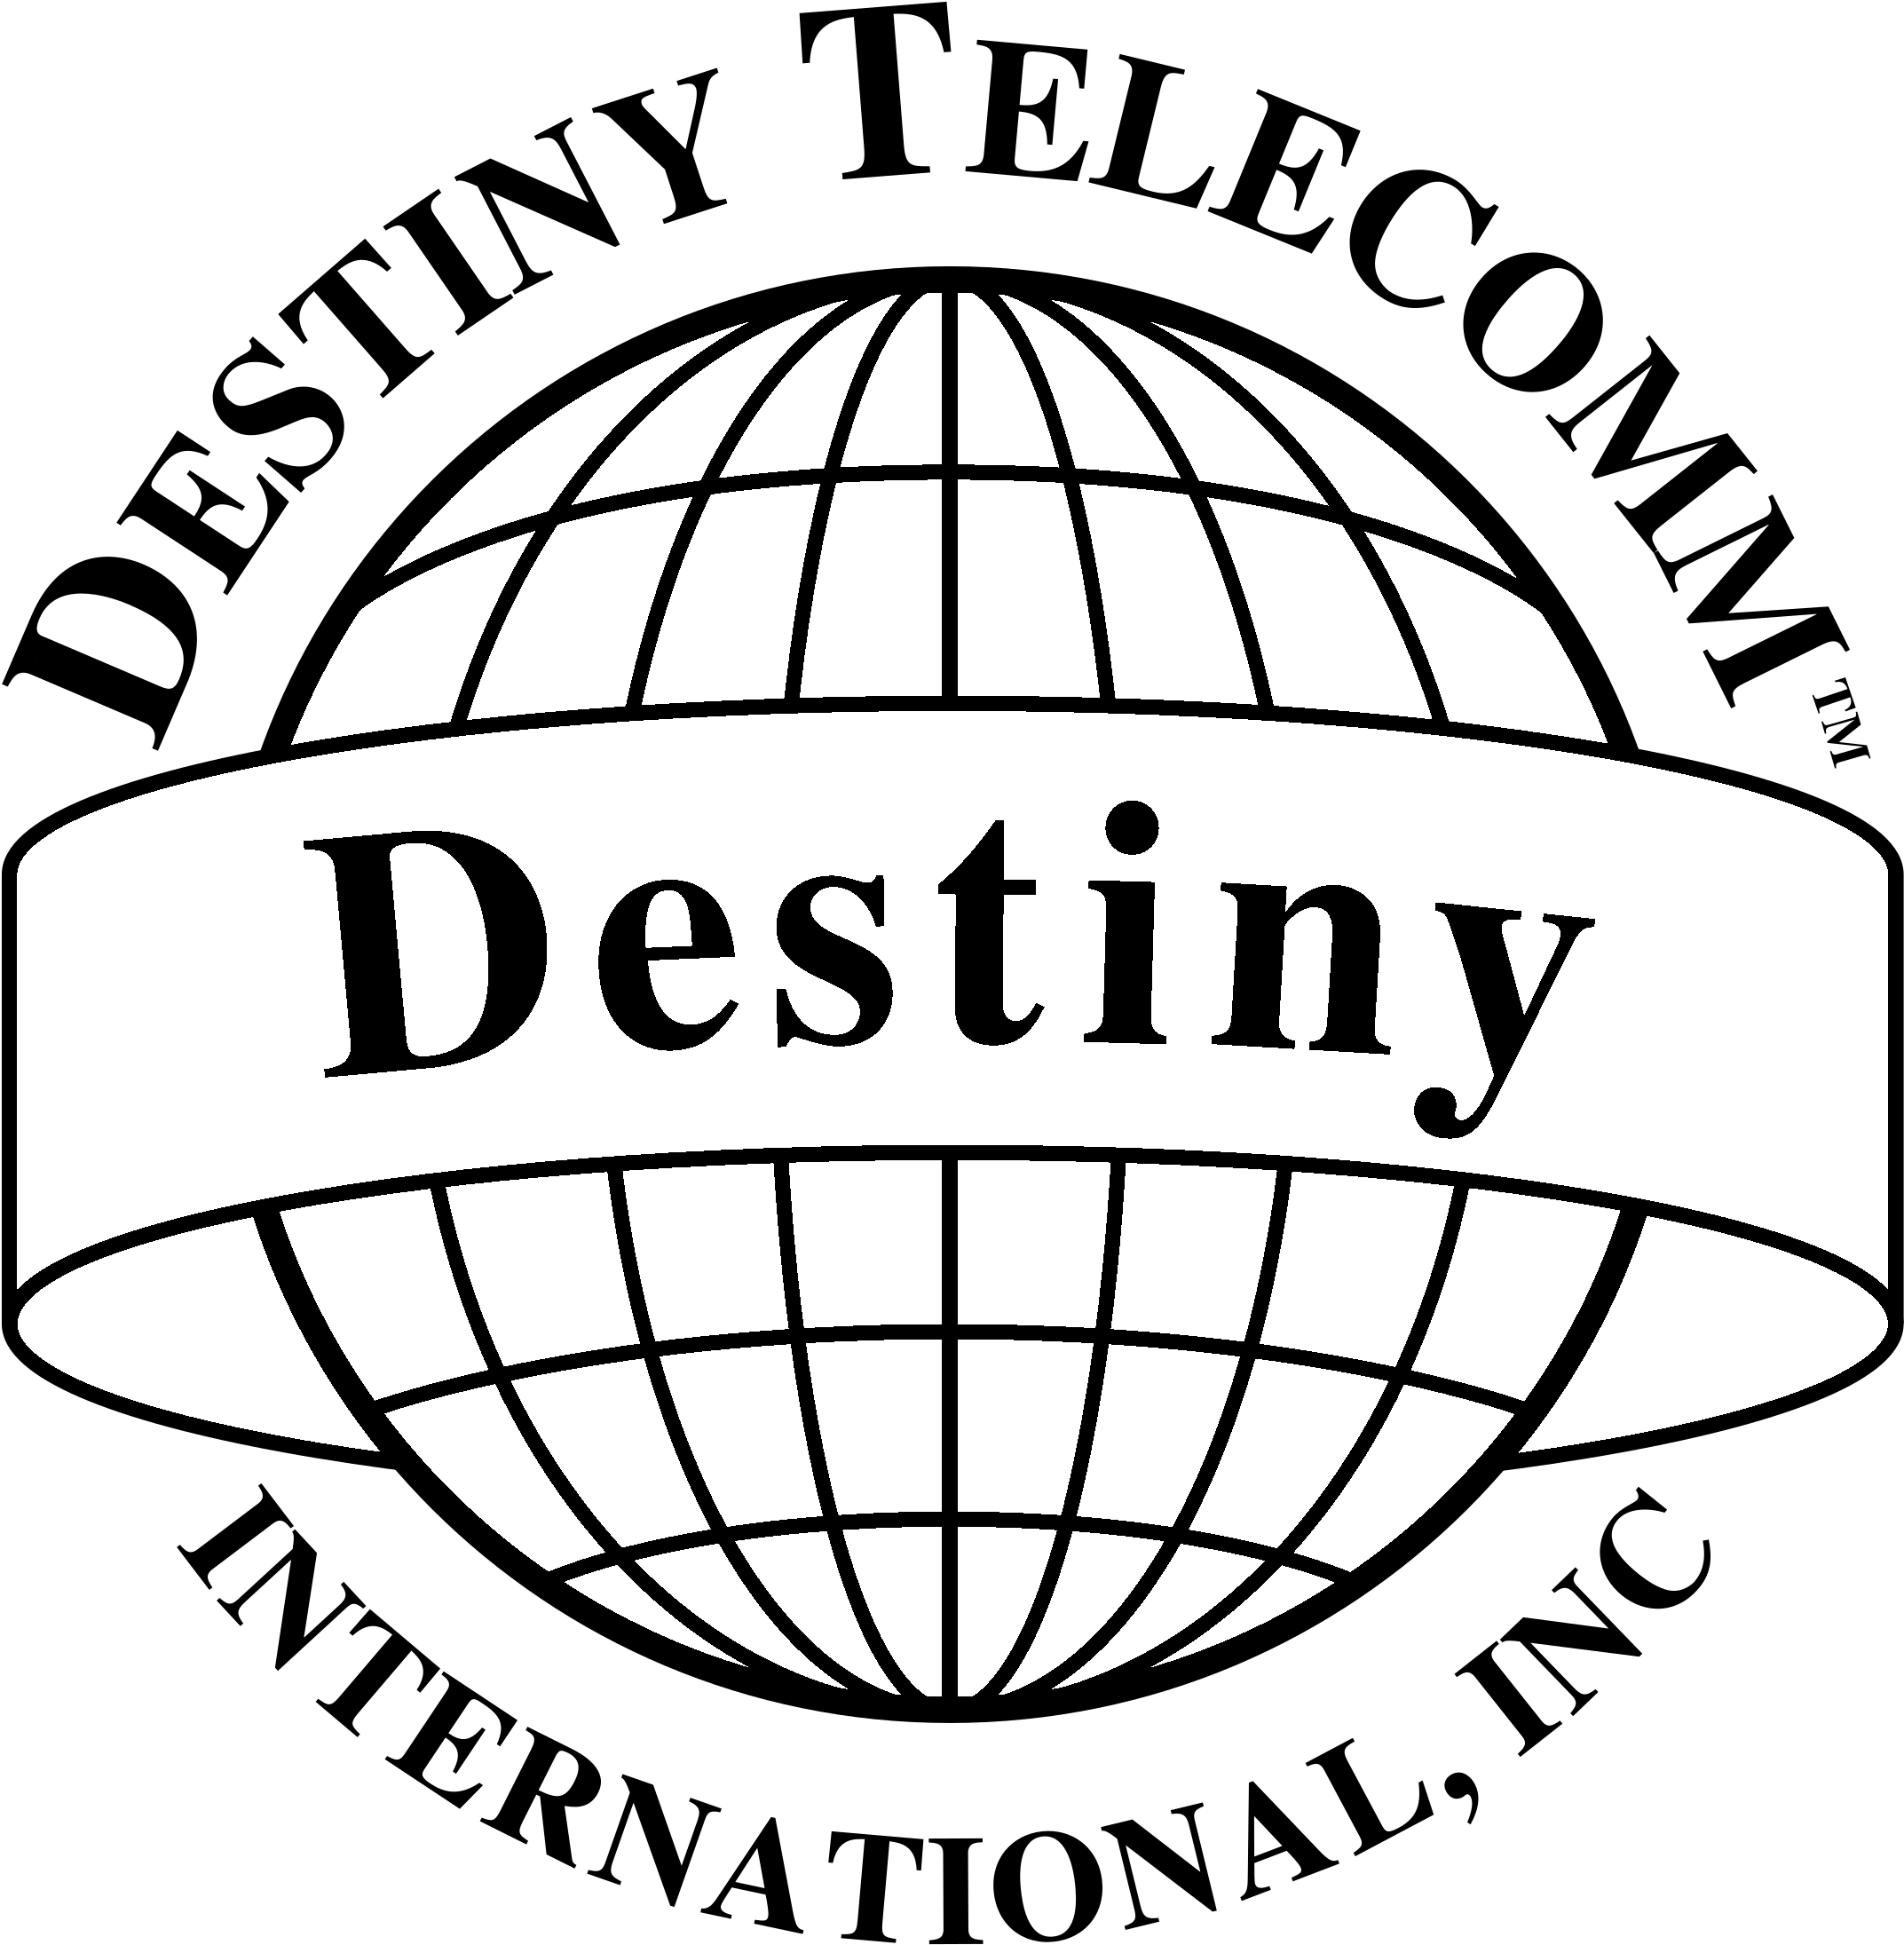 Destiny Telecomm Logo Black And White Assistance Dogs